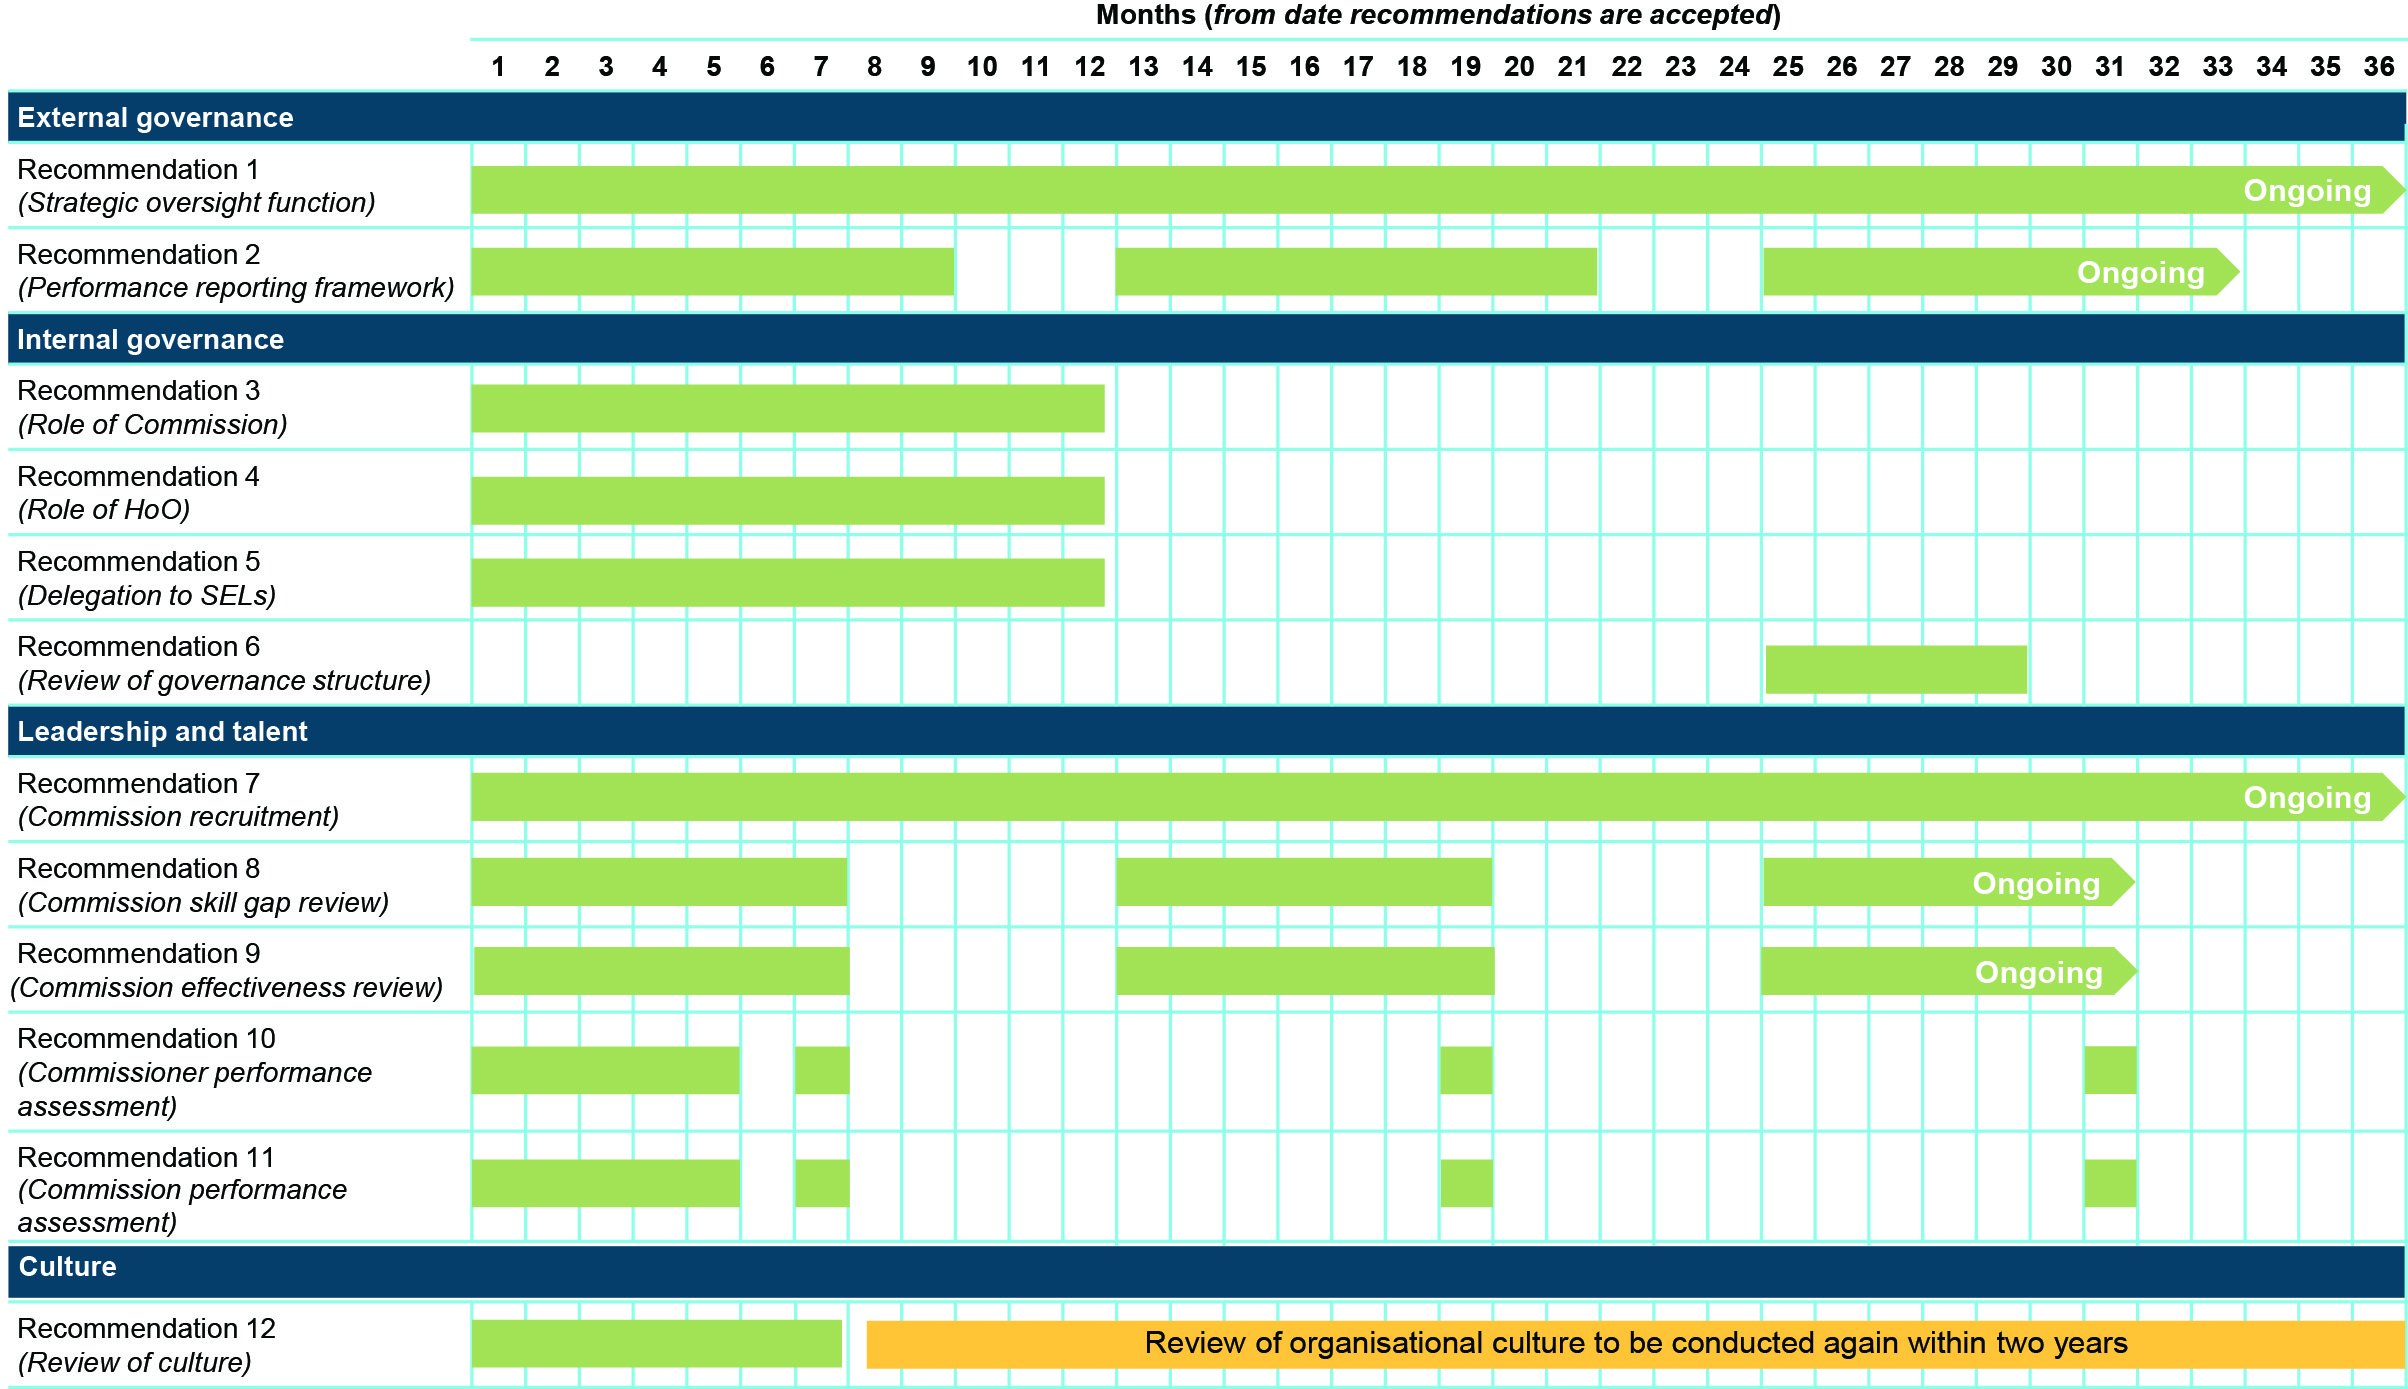 Figure 32: Governance and Leadership - proposed implementation timelines